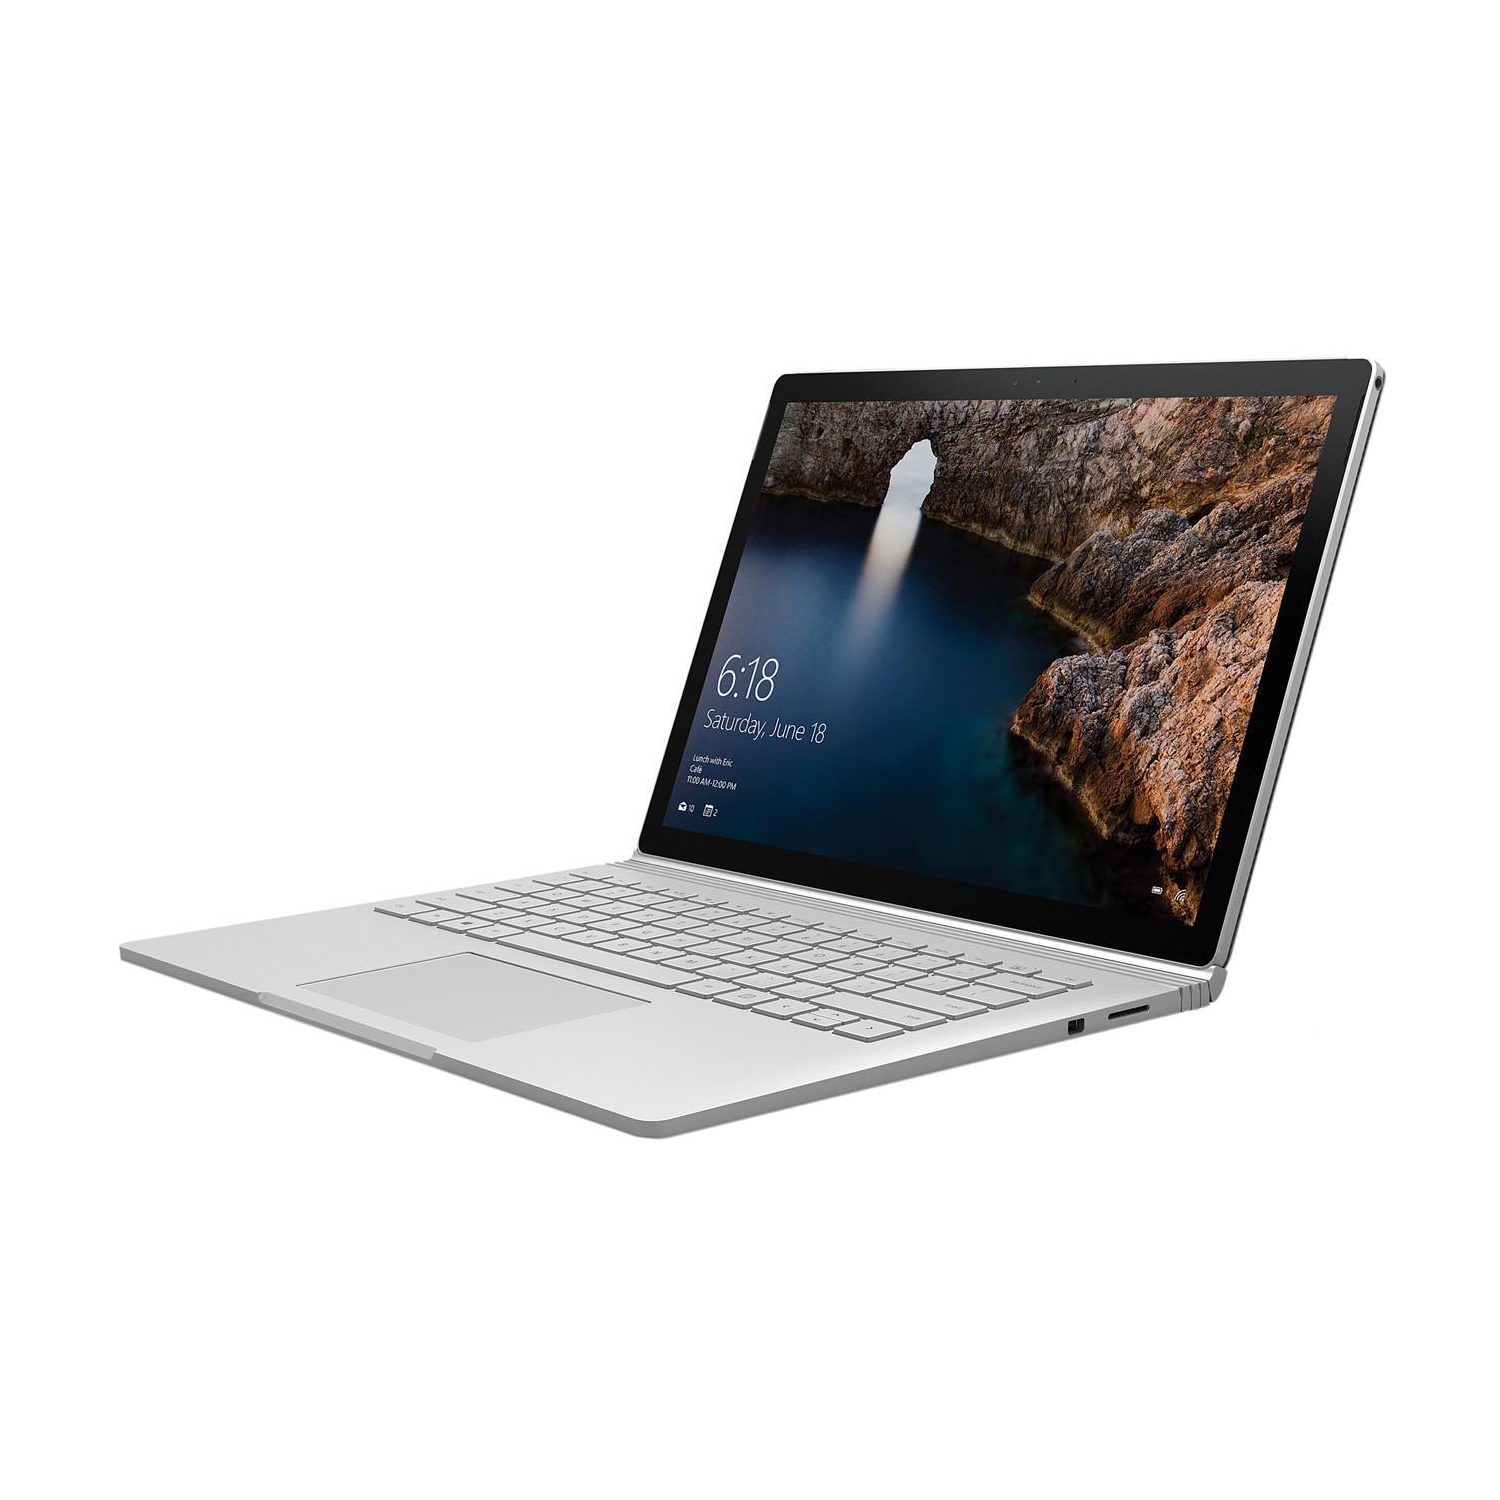 Refurbished (Good) - Microsoft Surface Book 2, 13.5", 2 in 1 Laptop- ( 8th Gen - Quad Core Intel i5 8350U / 256GB SSD / 8GB RAM ) Windows 10 Pro